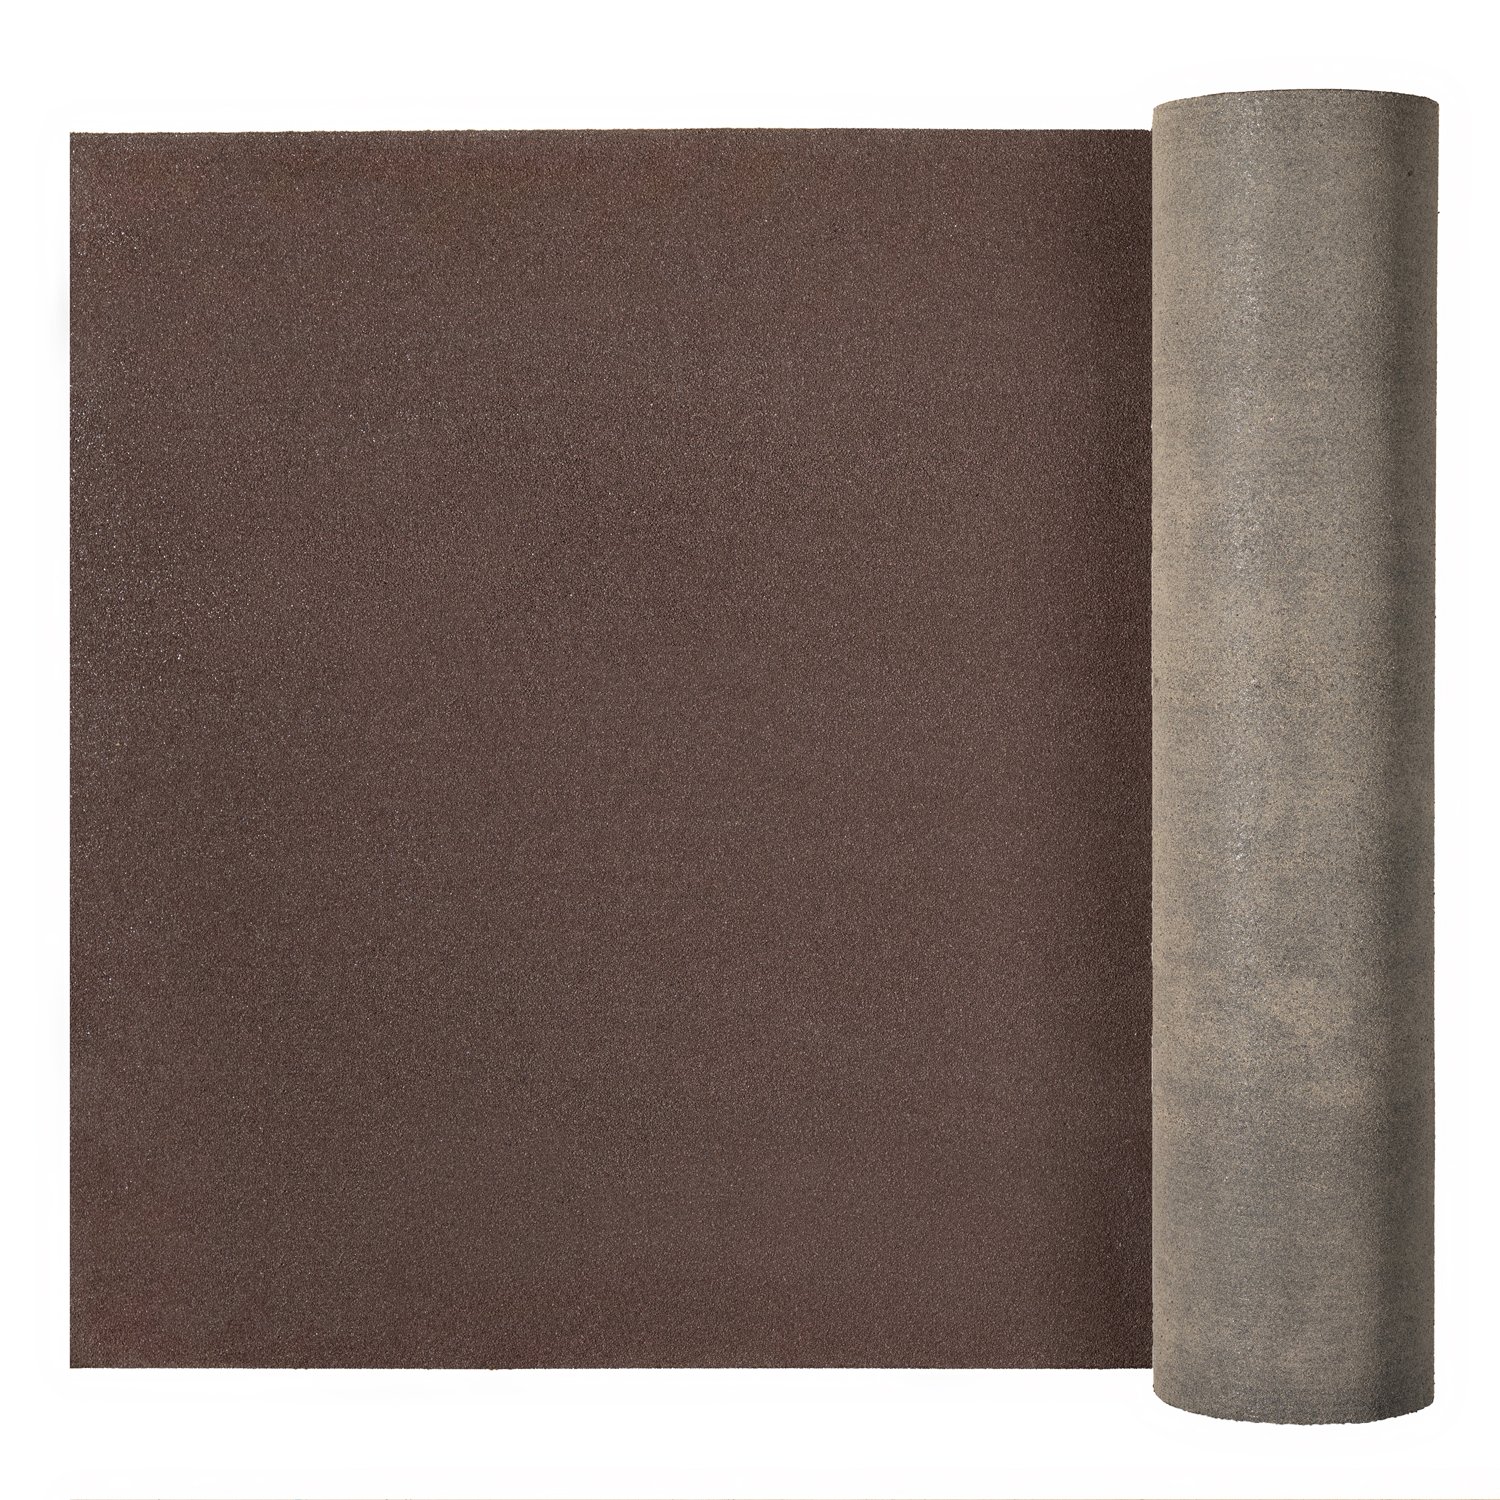 Ендовый ковер Quiet tile 1х10м, коричневый